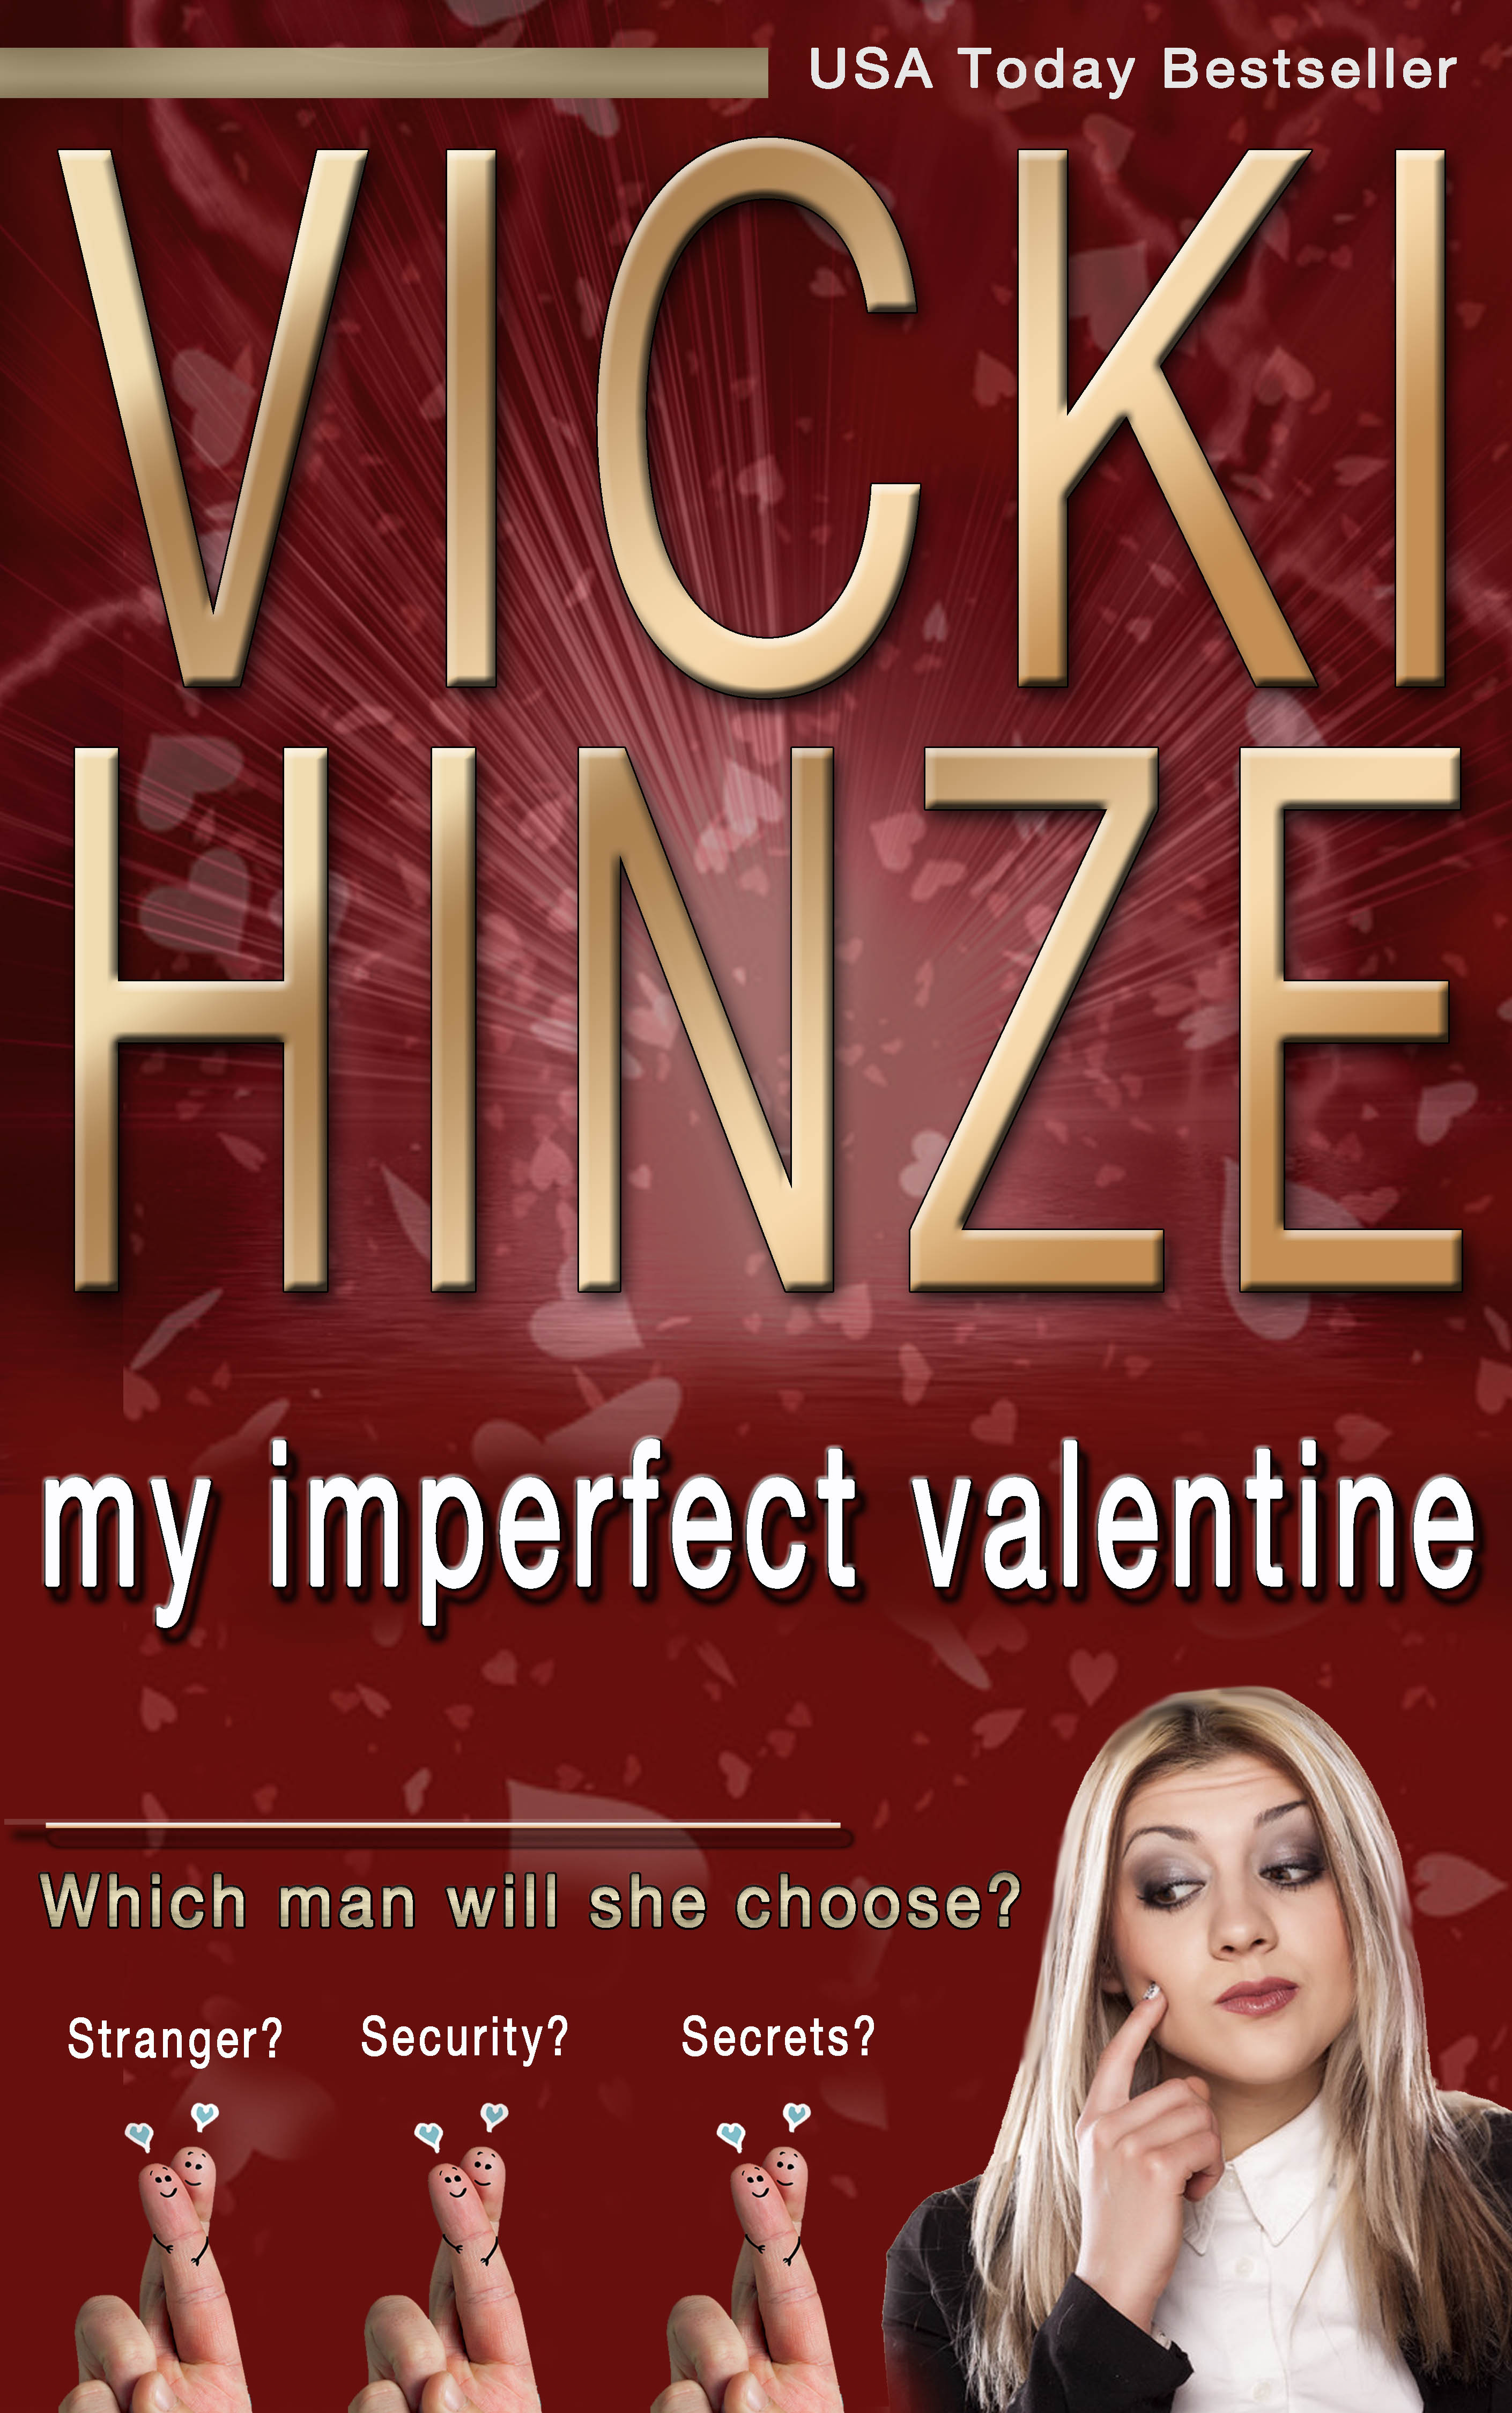 contemporary romance, new adult romance, holiday romance, Valentine's Day romance, vicki hinze, bestselling fiction authors